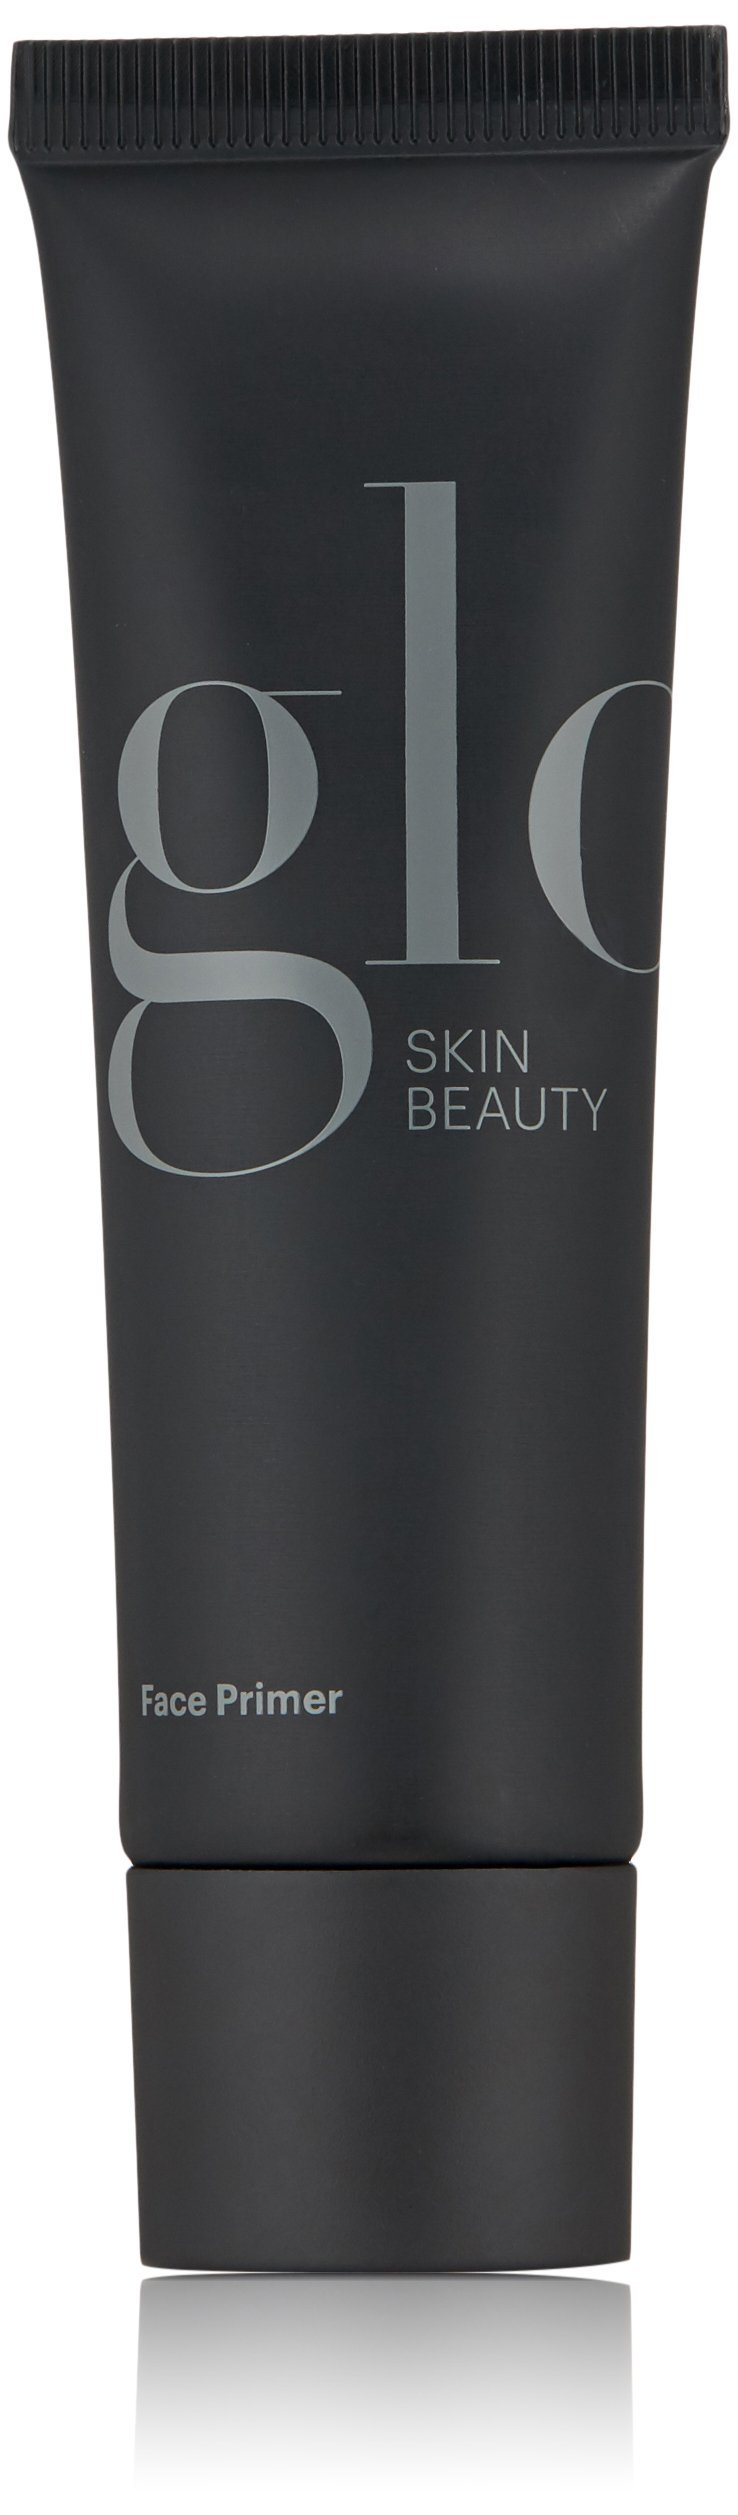 Glo Skin Beauty Face Primer - Makeup Primer for Mineral Makeup - Liquid and Powder Foundation Primer, 1 fl. oz. - BeesActive Australia